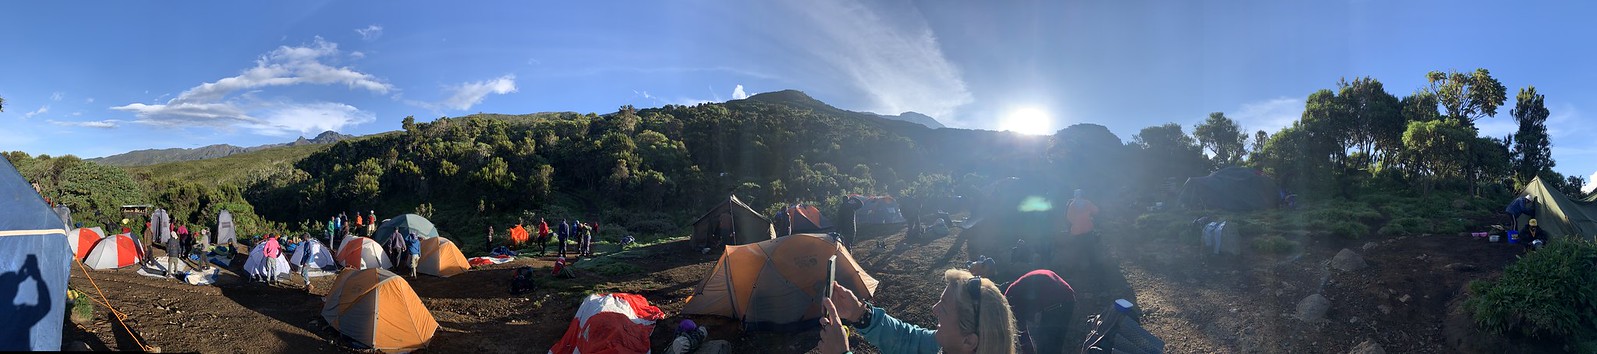 2019_EXPD_Kilimanjaro_Rachel 6